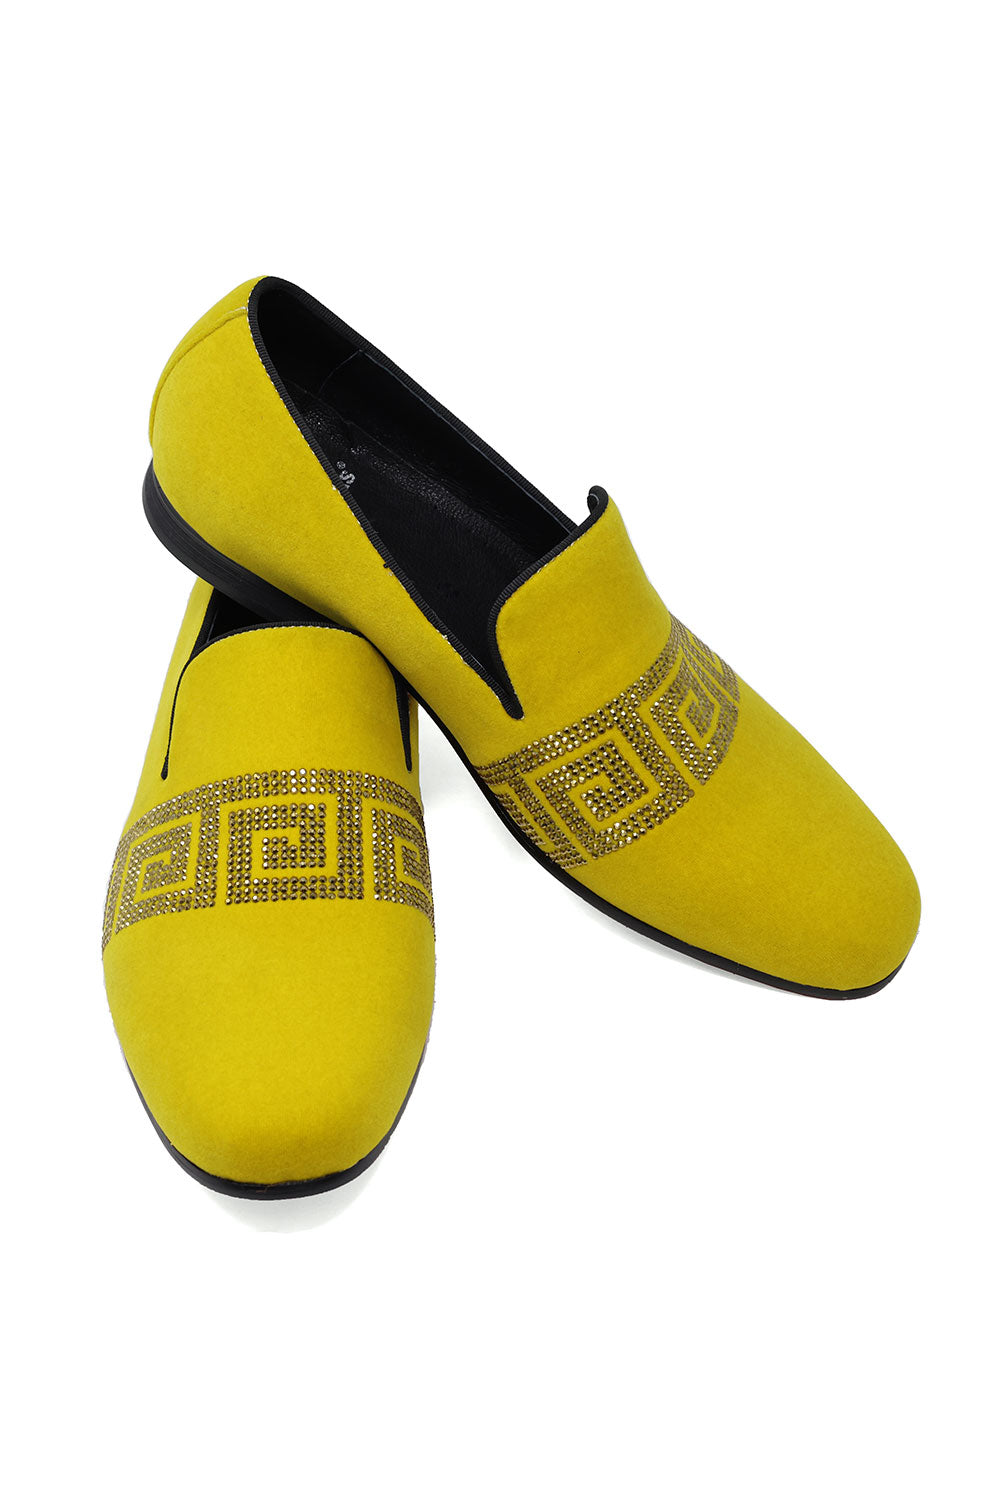 BARABAS Men's Rhinestone Greek key Pattern Slip On Dress Shoes SH3067 Mustard Gold